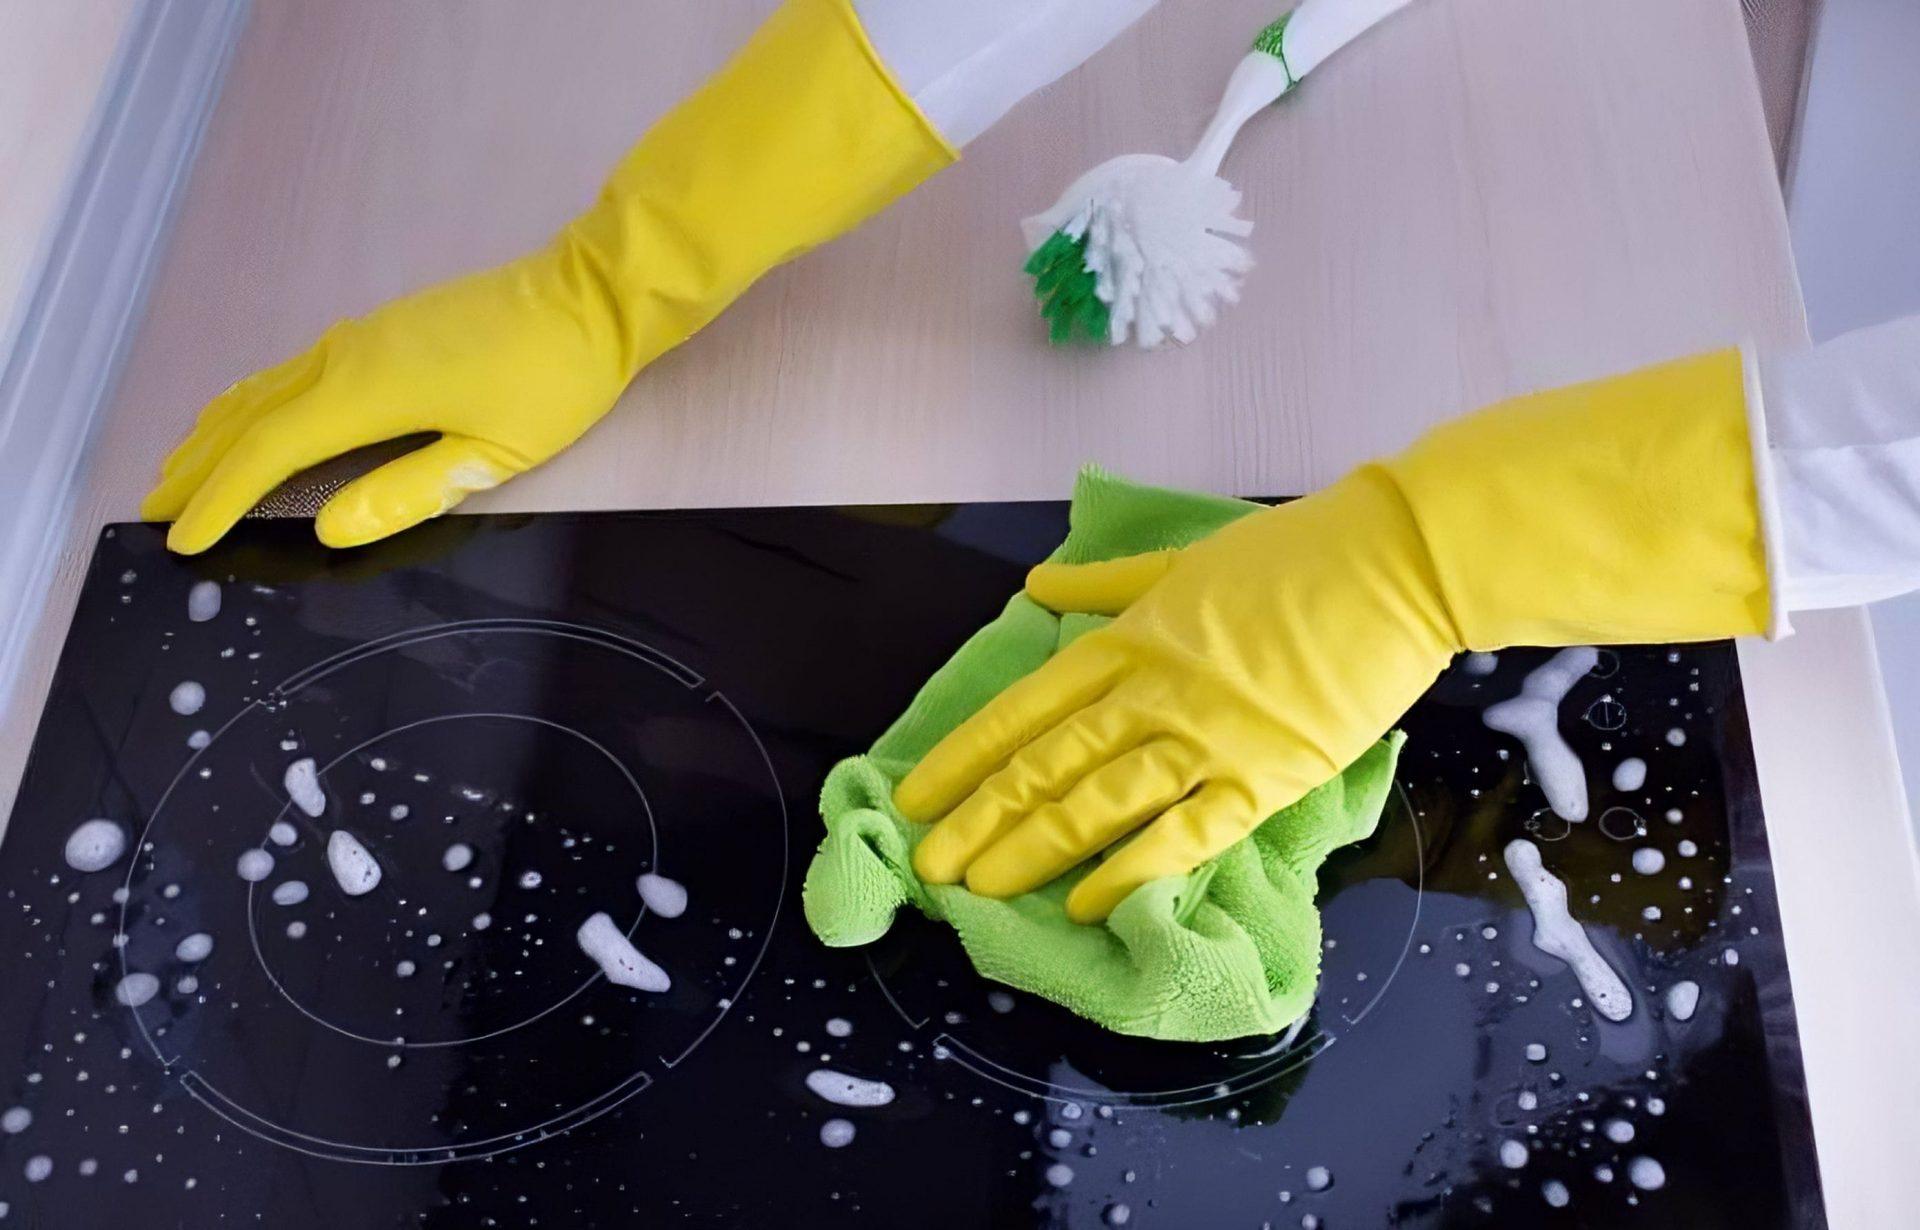 Comment nettoyer sa cuisine et la garder propre - Carolin